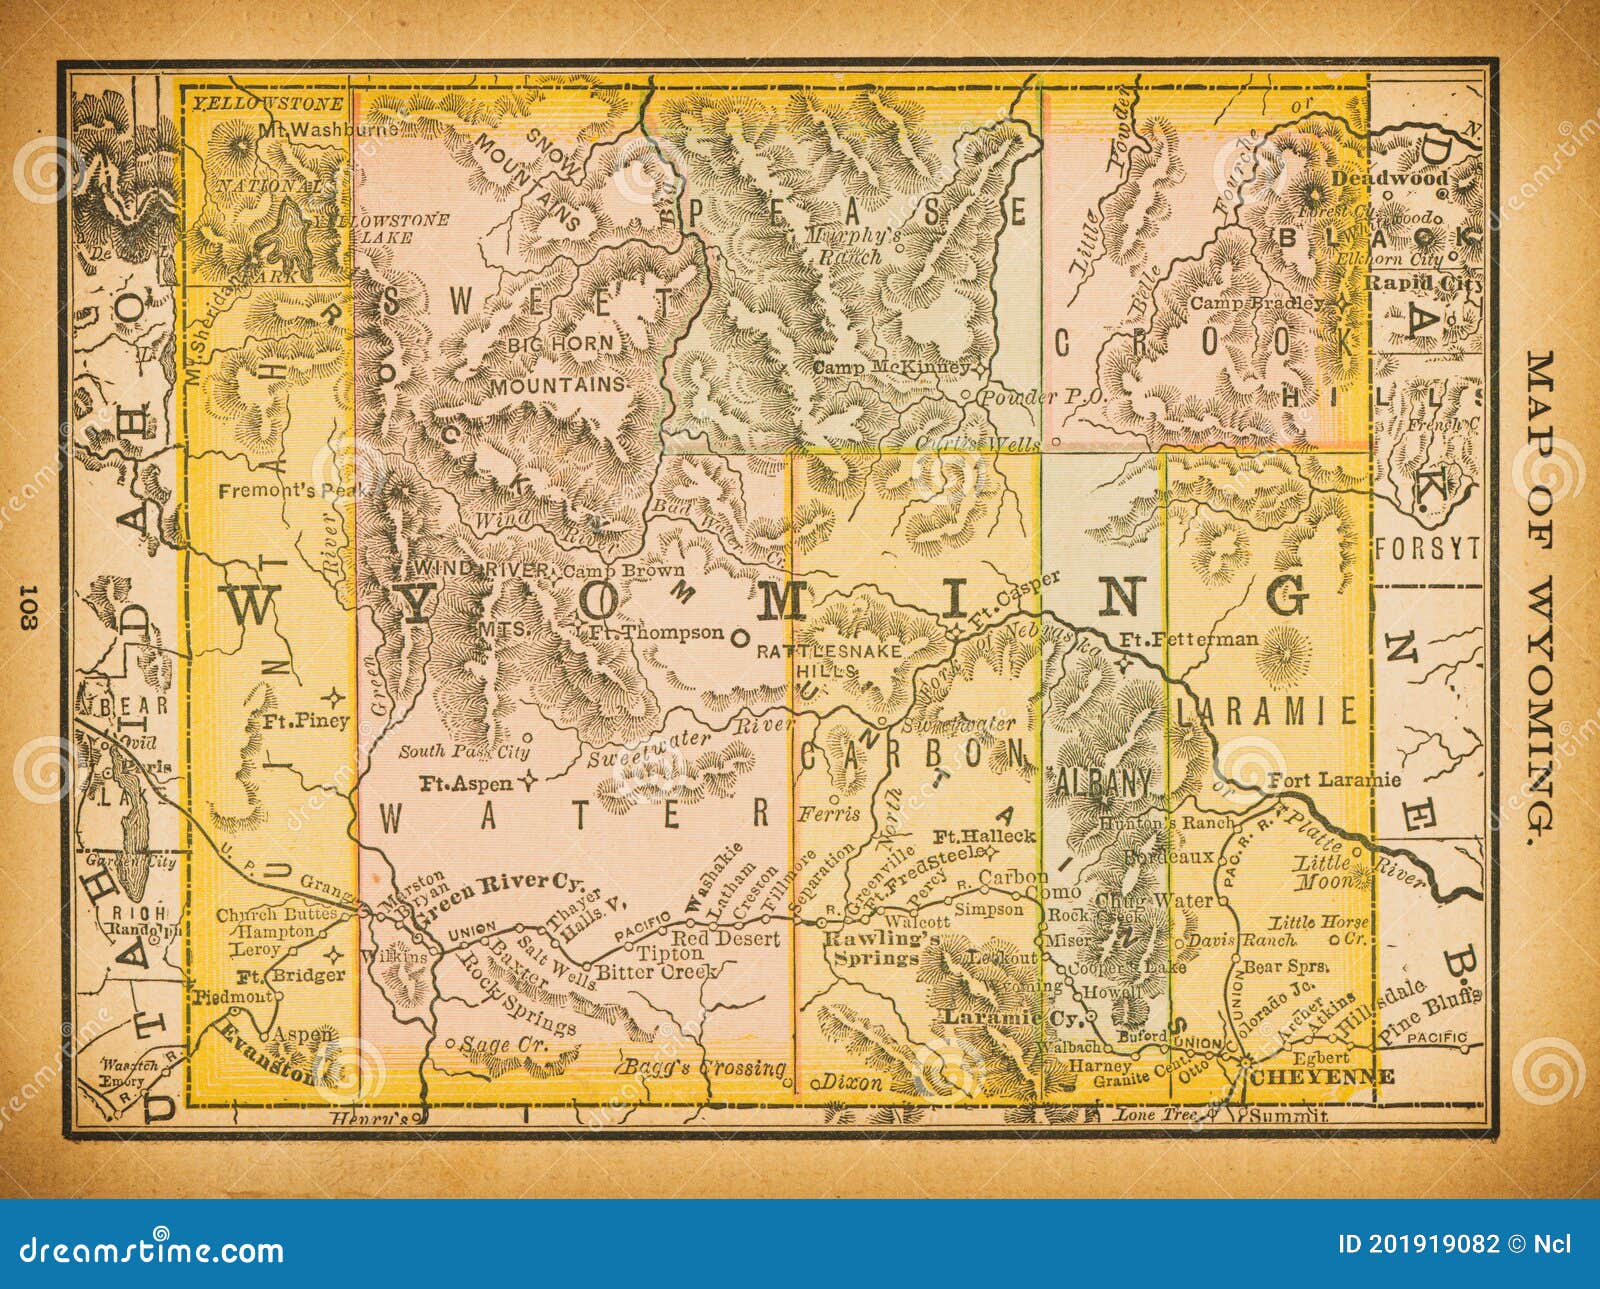 19th century map of wyoming